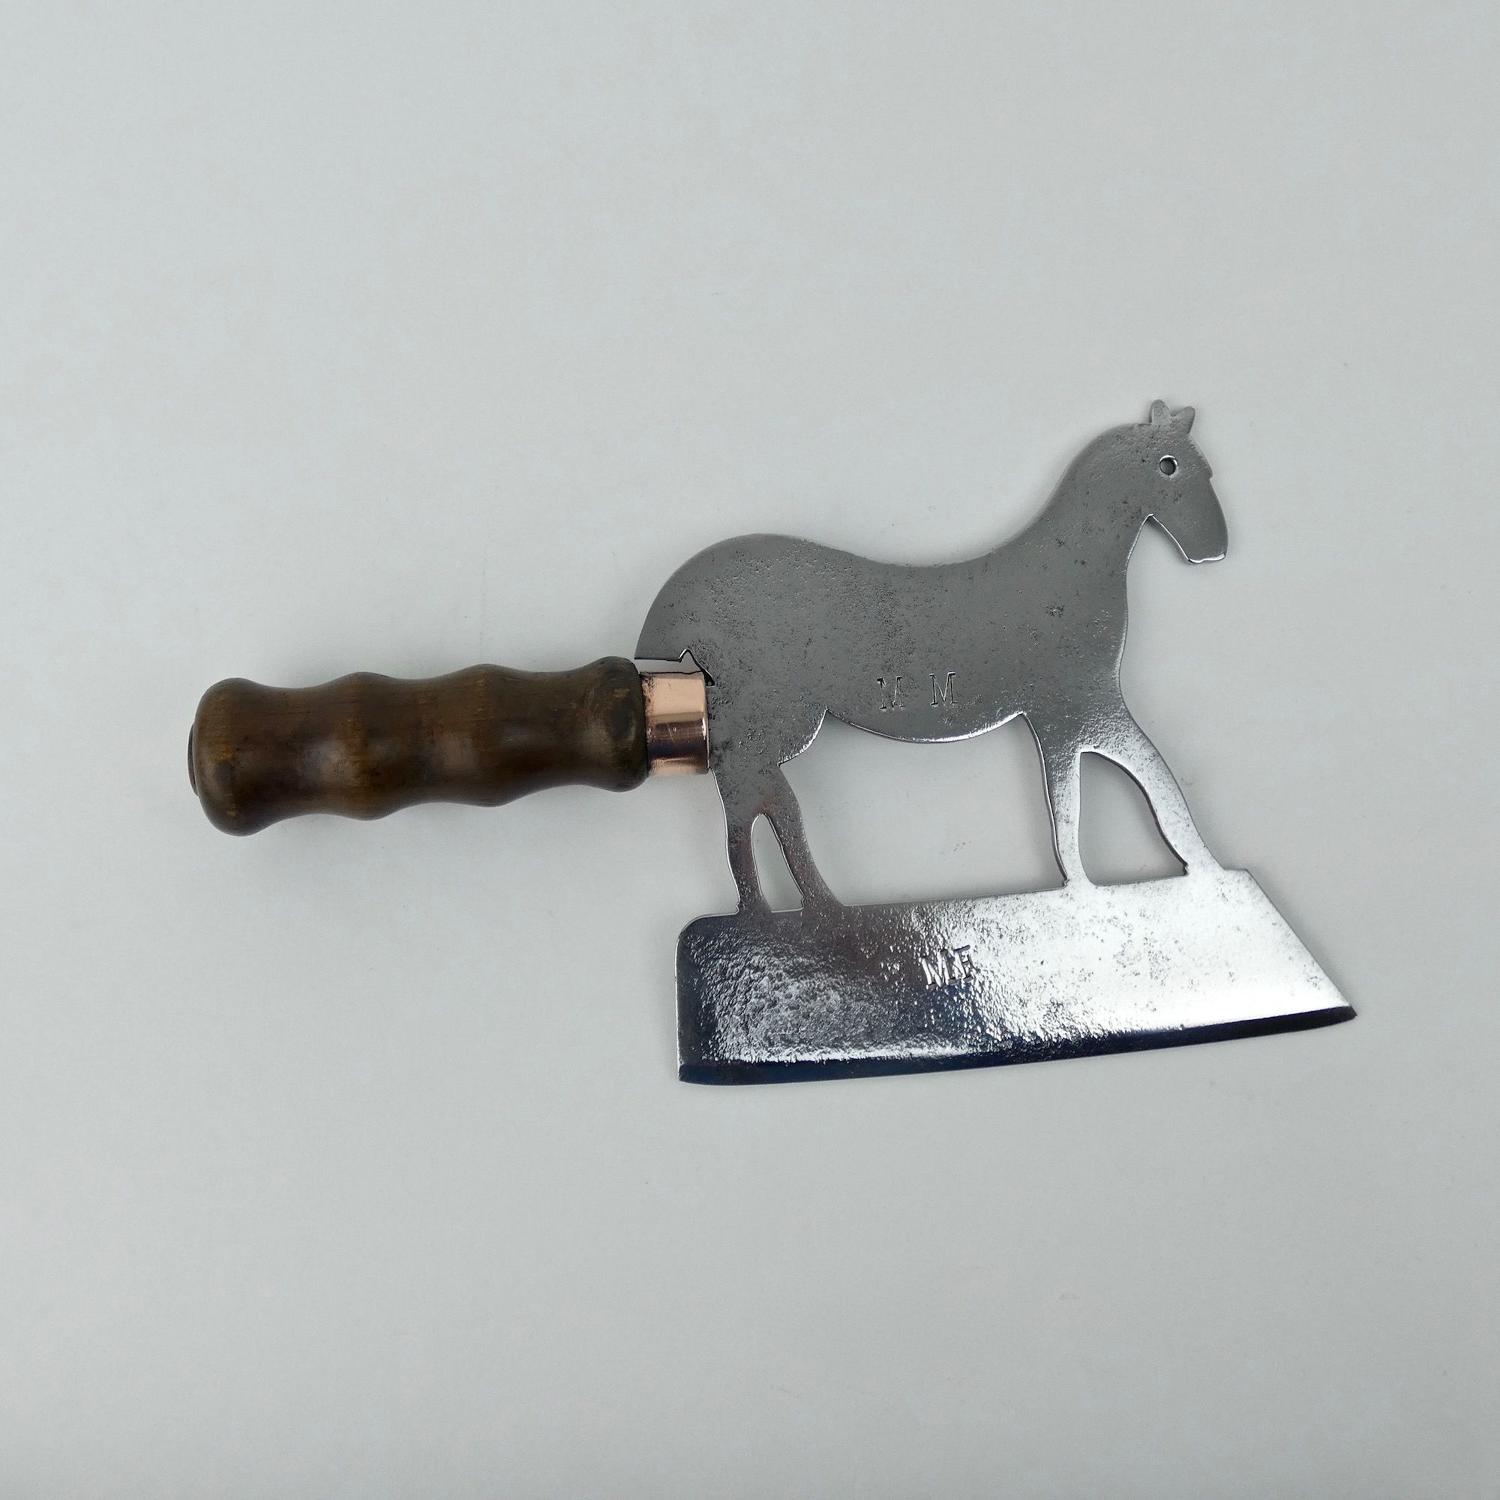 Horse shaped sugar cleaver